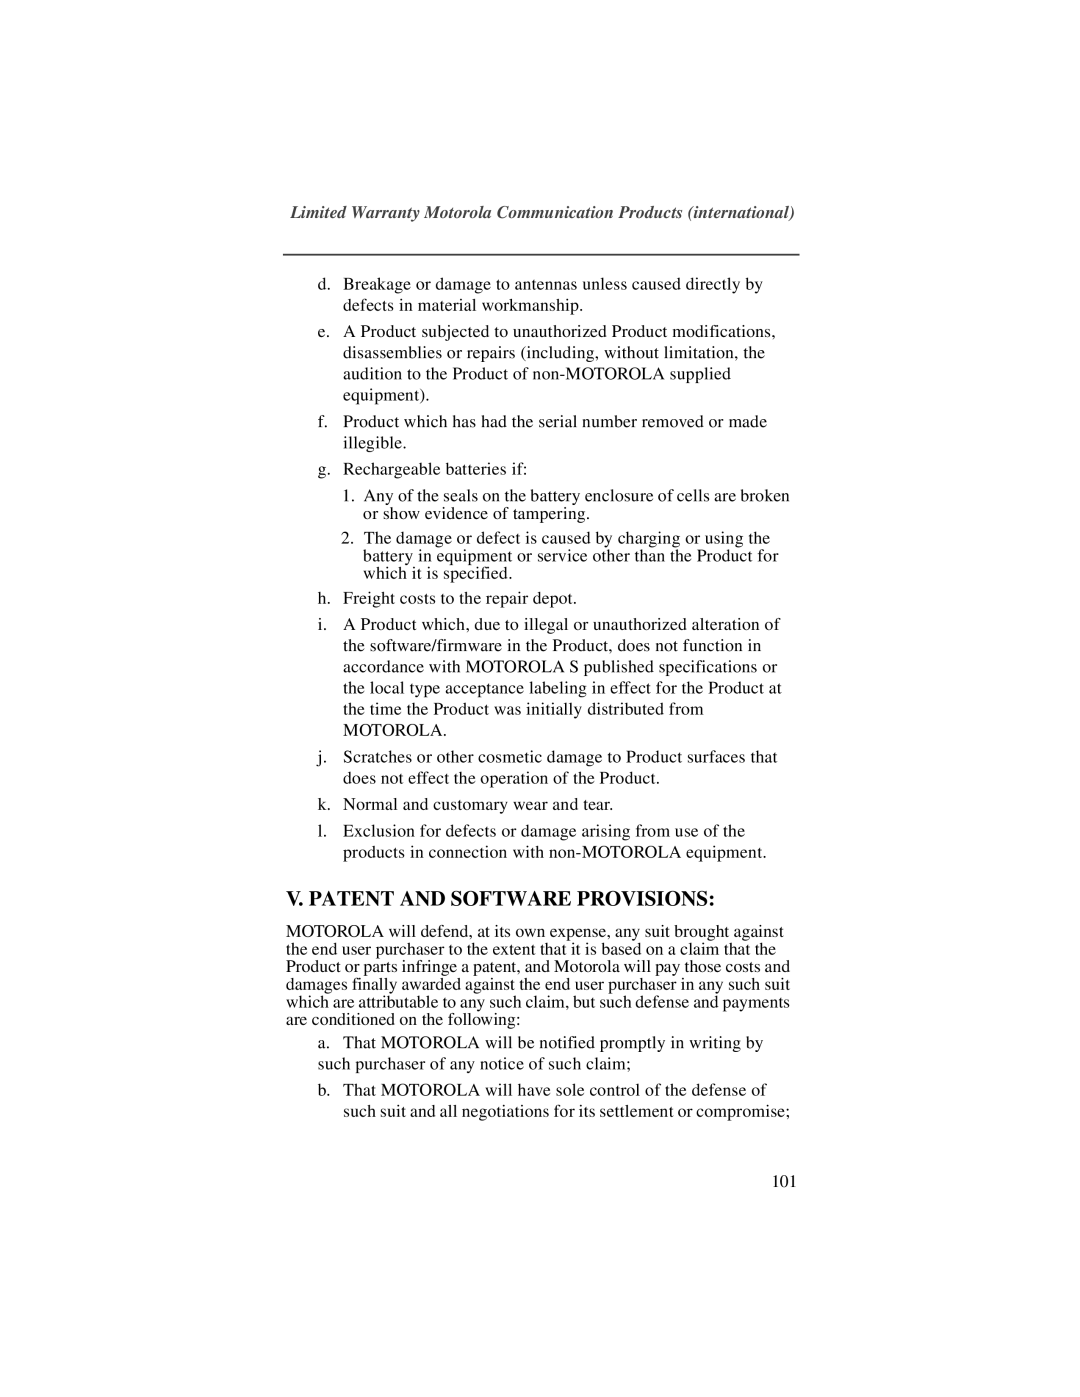 Motorola i2000plus manual Patent and Software Provisions 